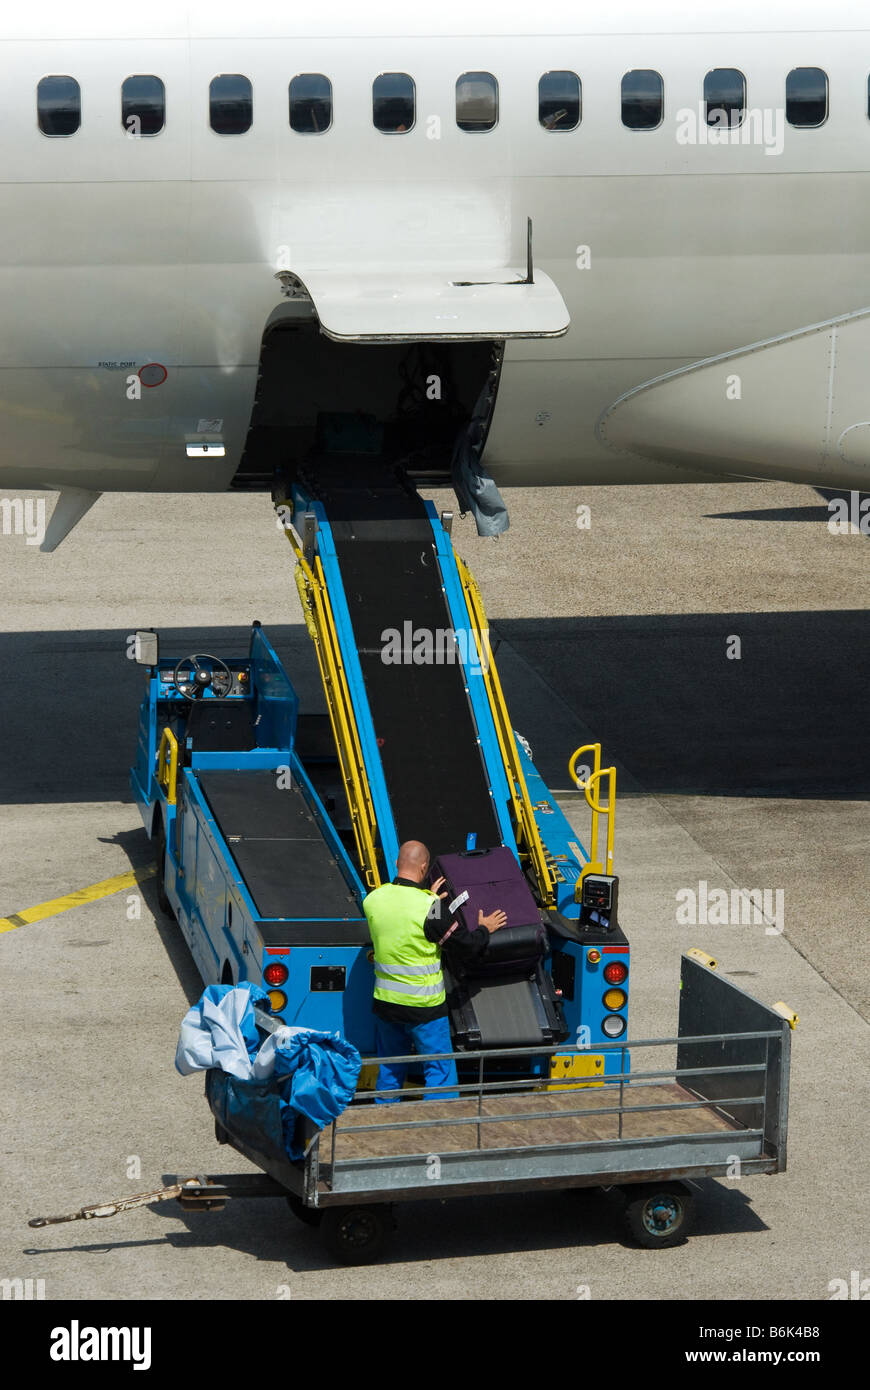 Koffer im Flugzeug auf dem Flughafen be Stockfotografie - Alamy